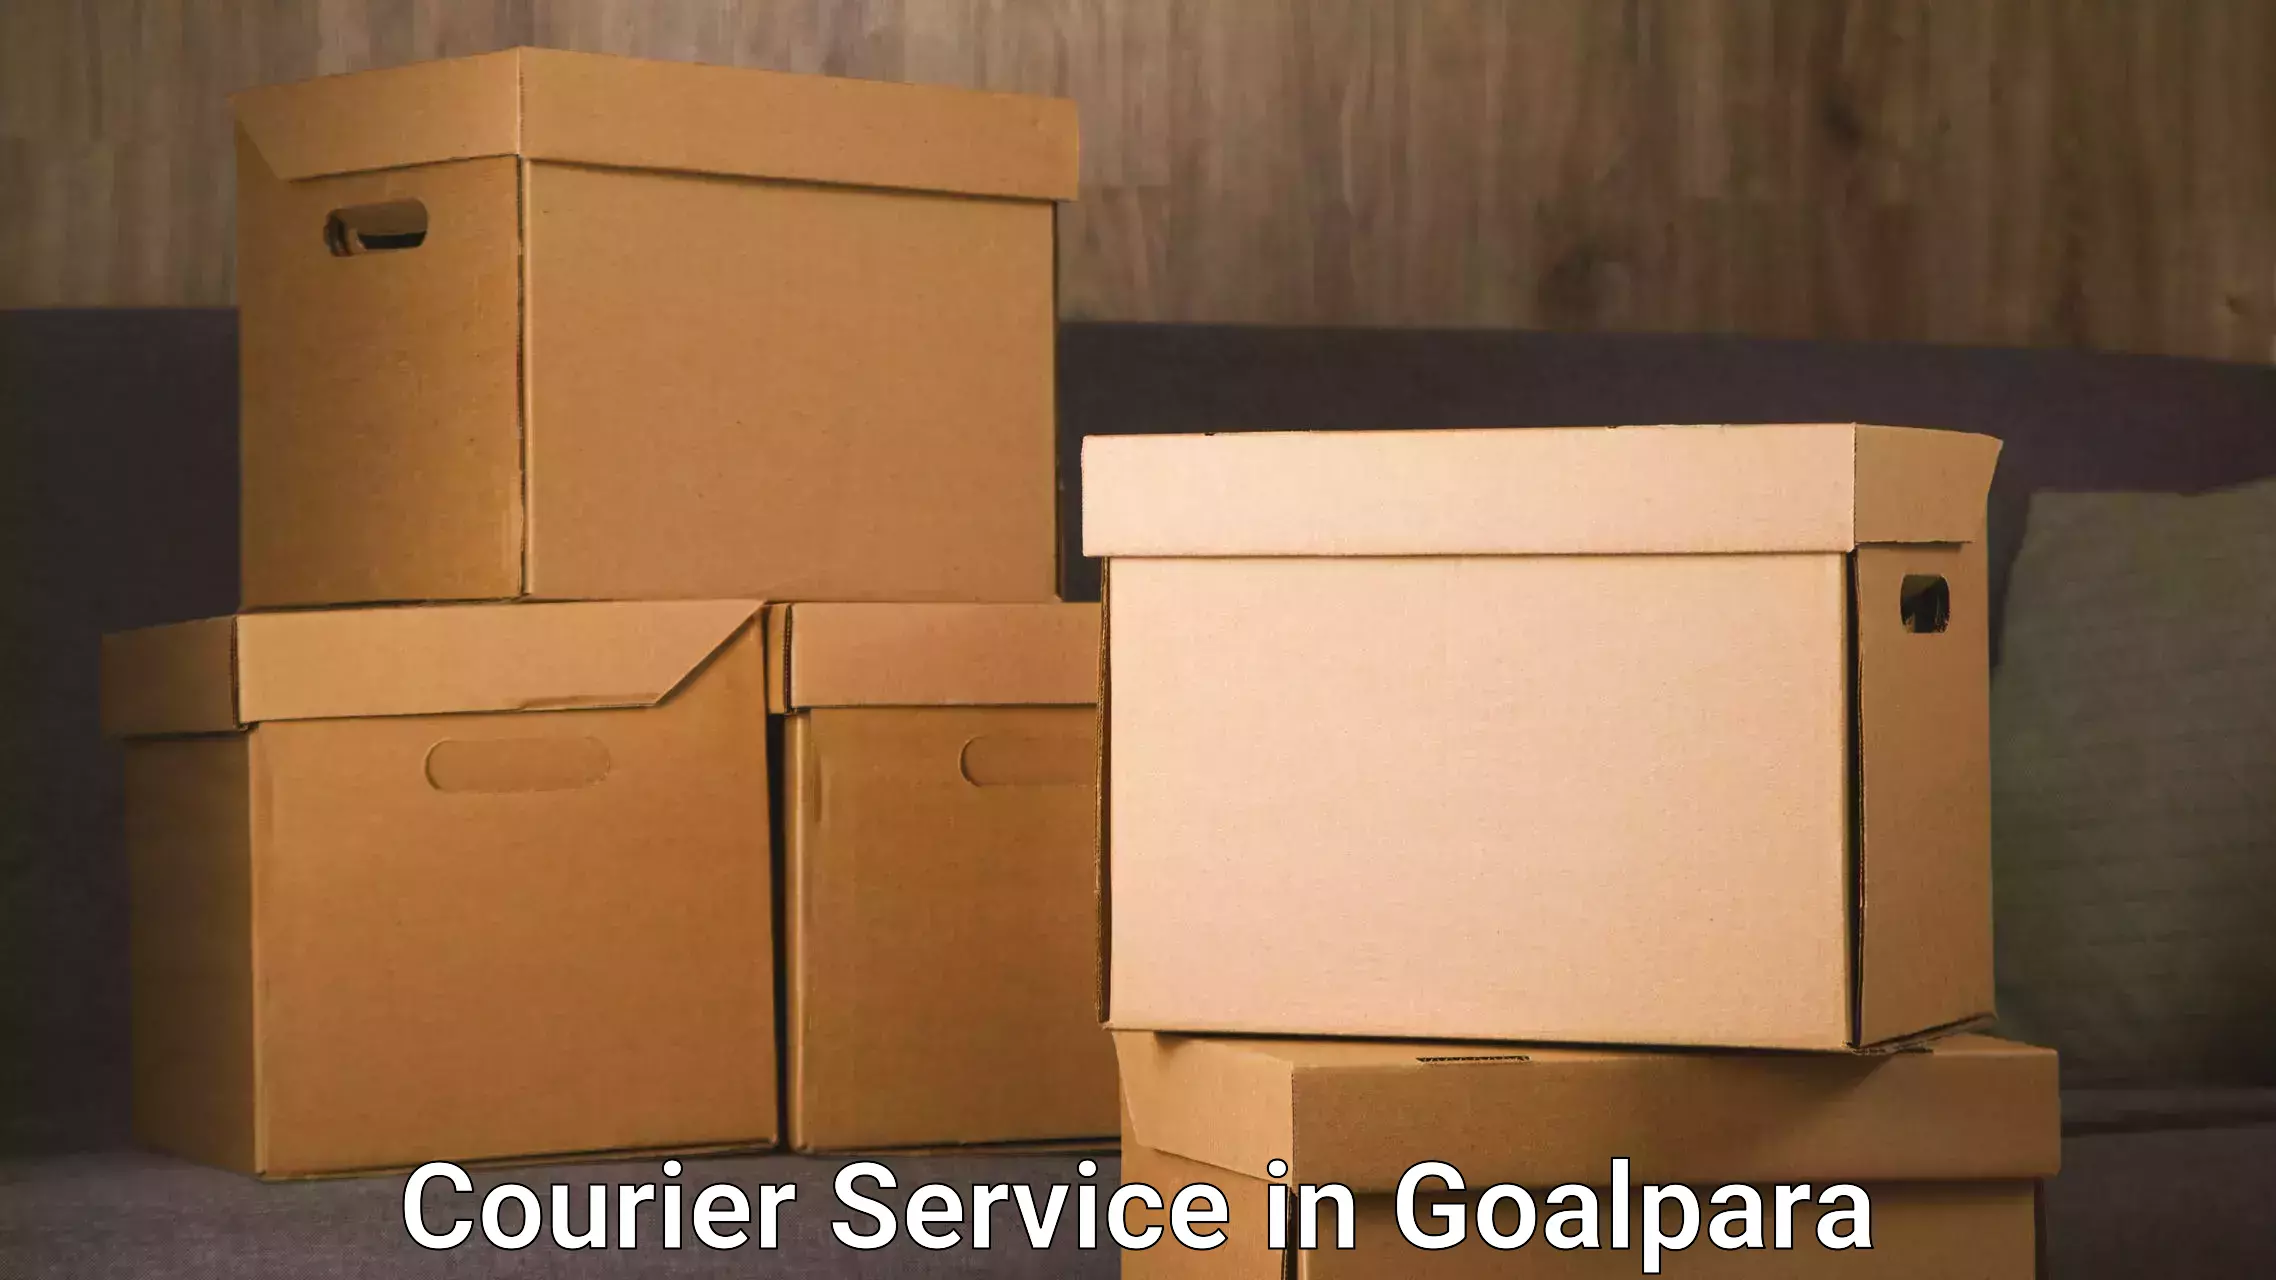 Logistics and distribution in Goalpara